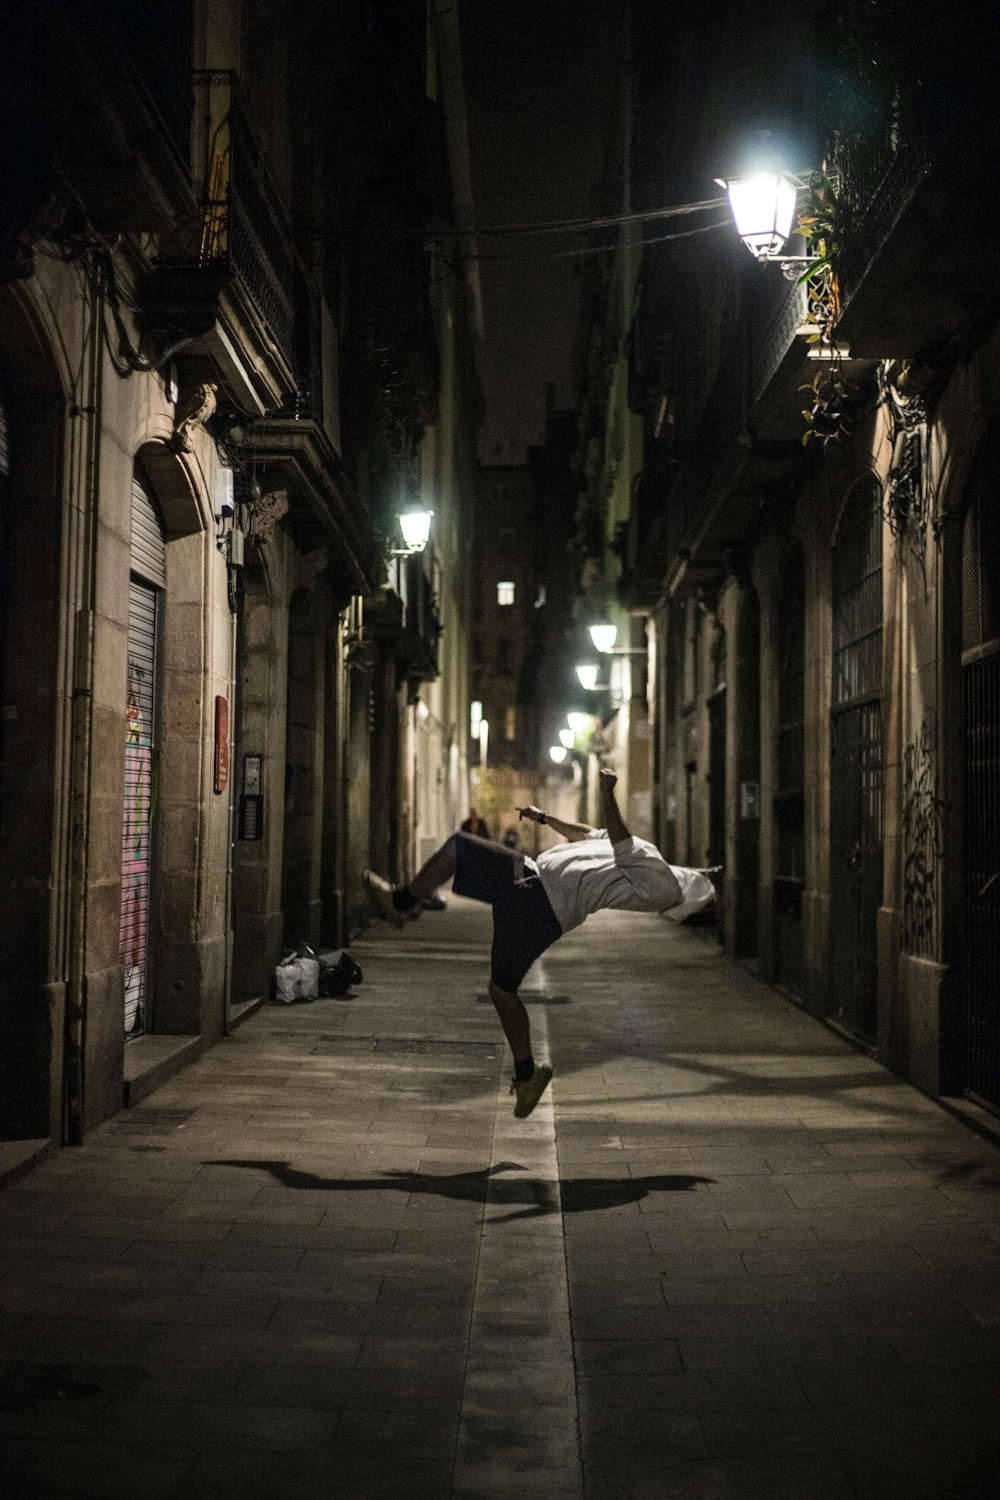 man doing acrobat trick on street